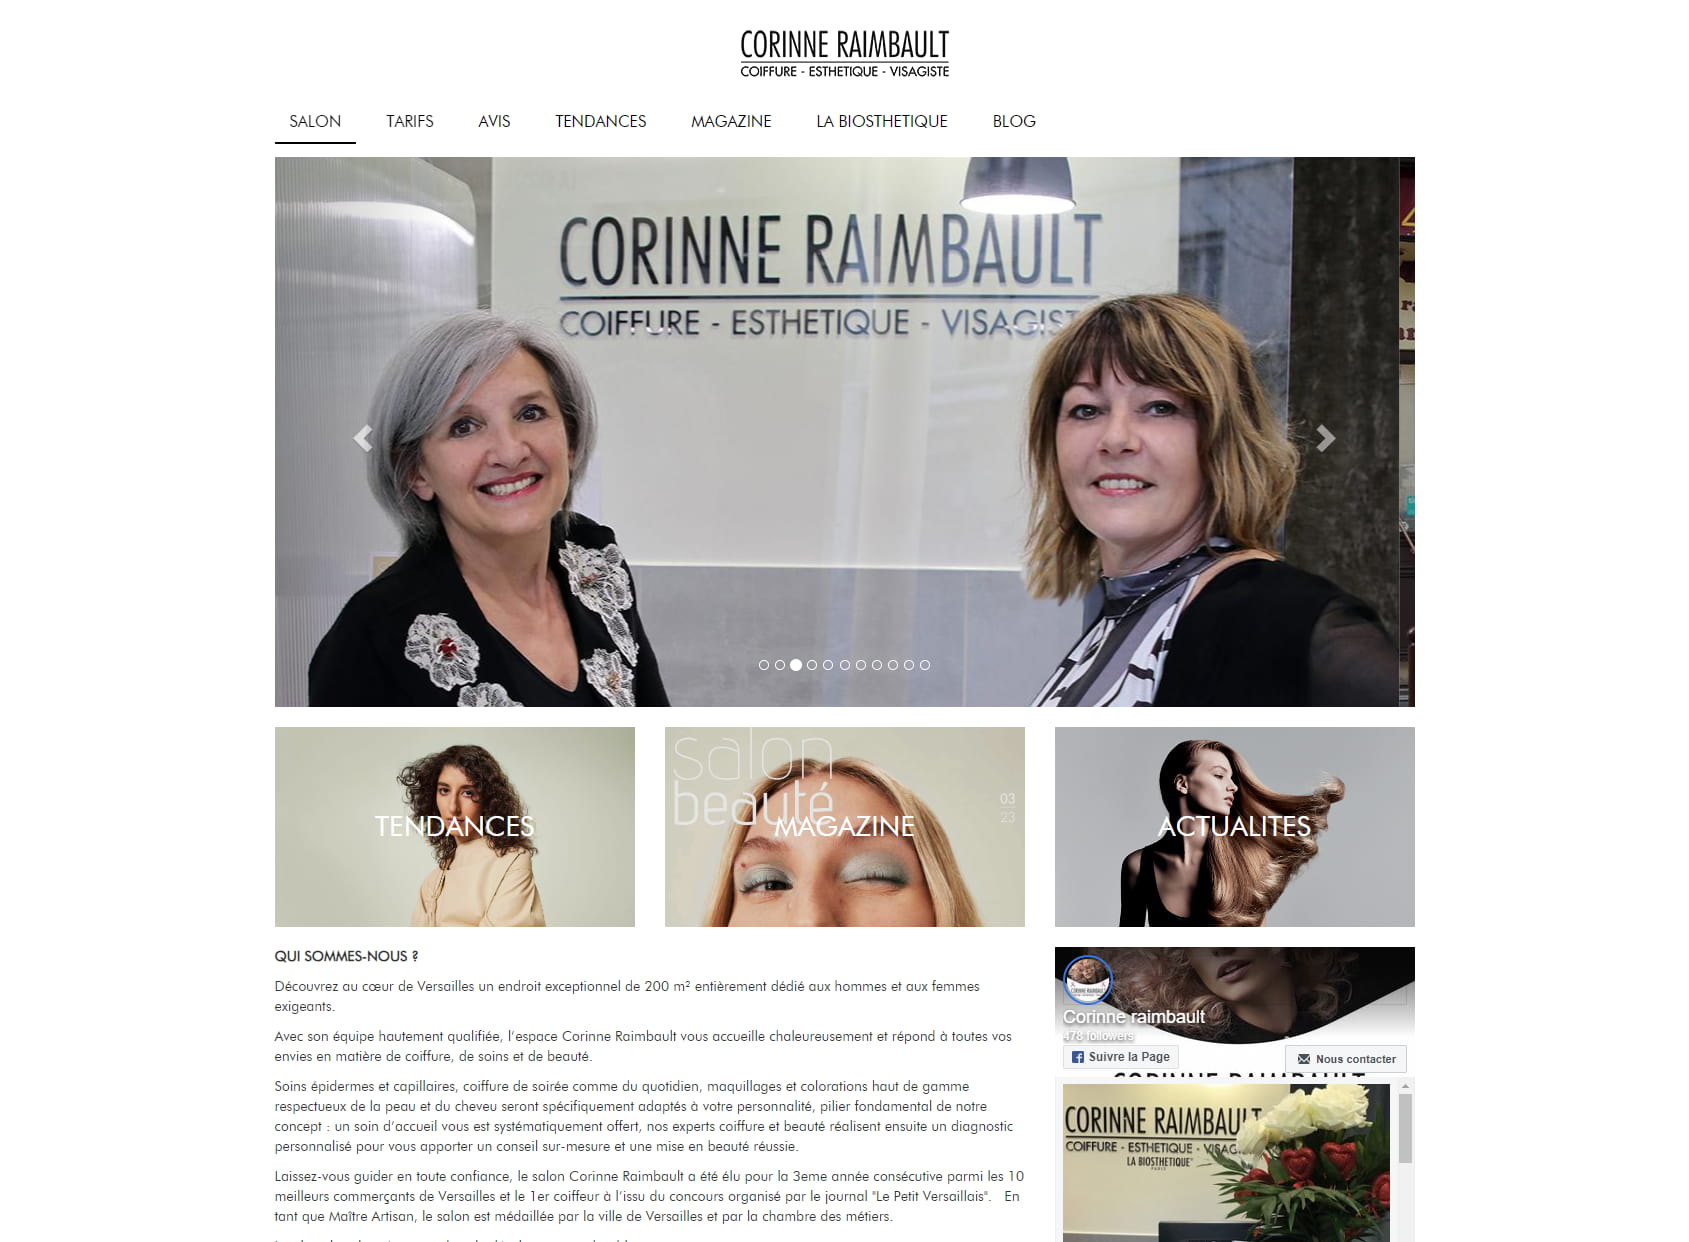 Corinne RAIMBAULT - Coiffure - Esthétique - Visagiste